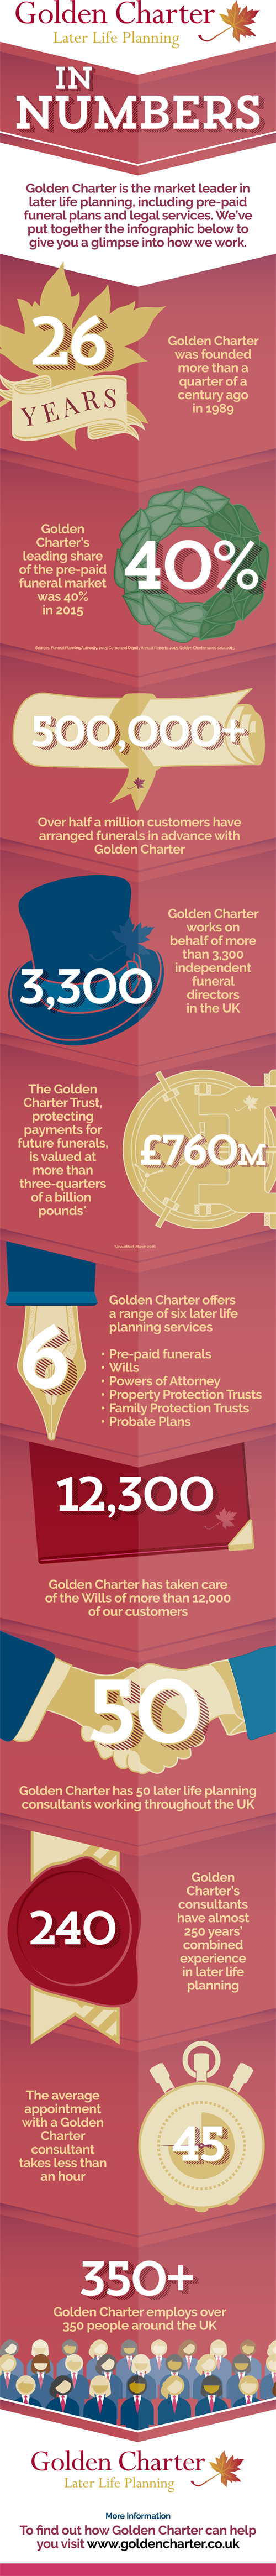 Golden Charter in numbers